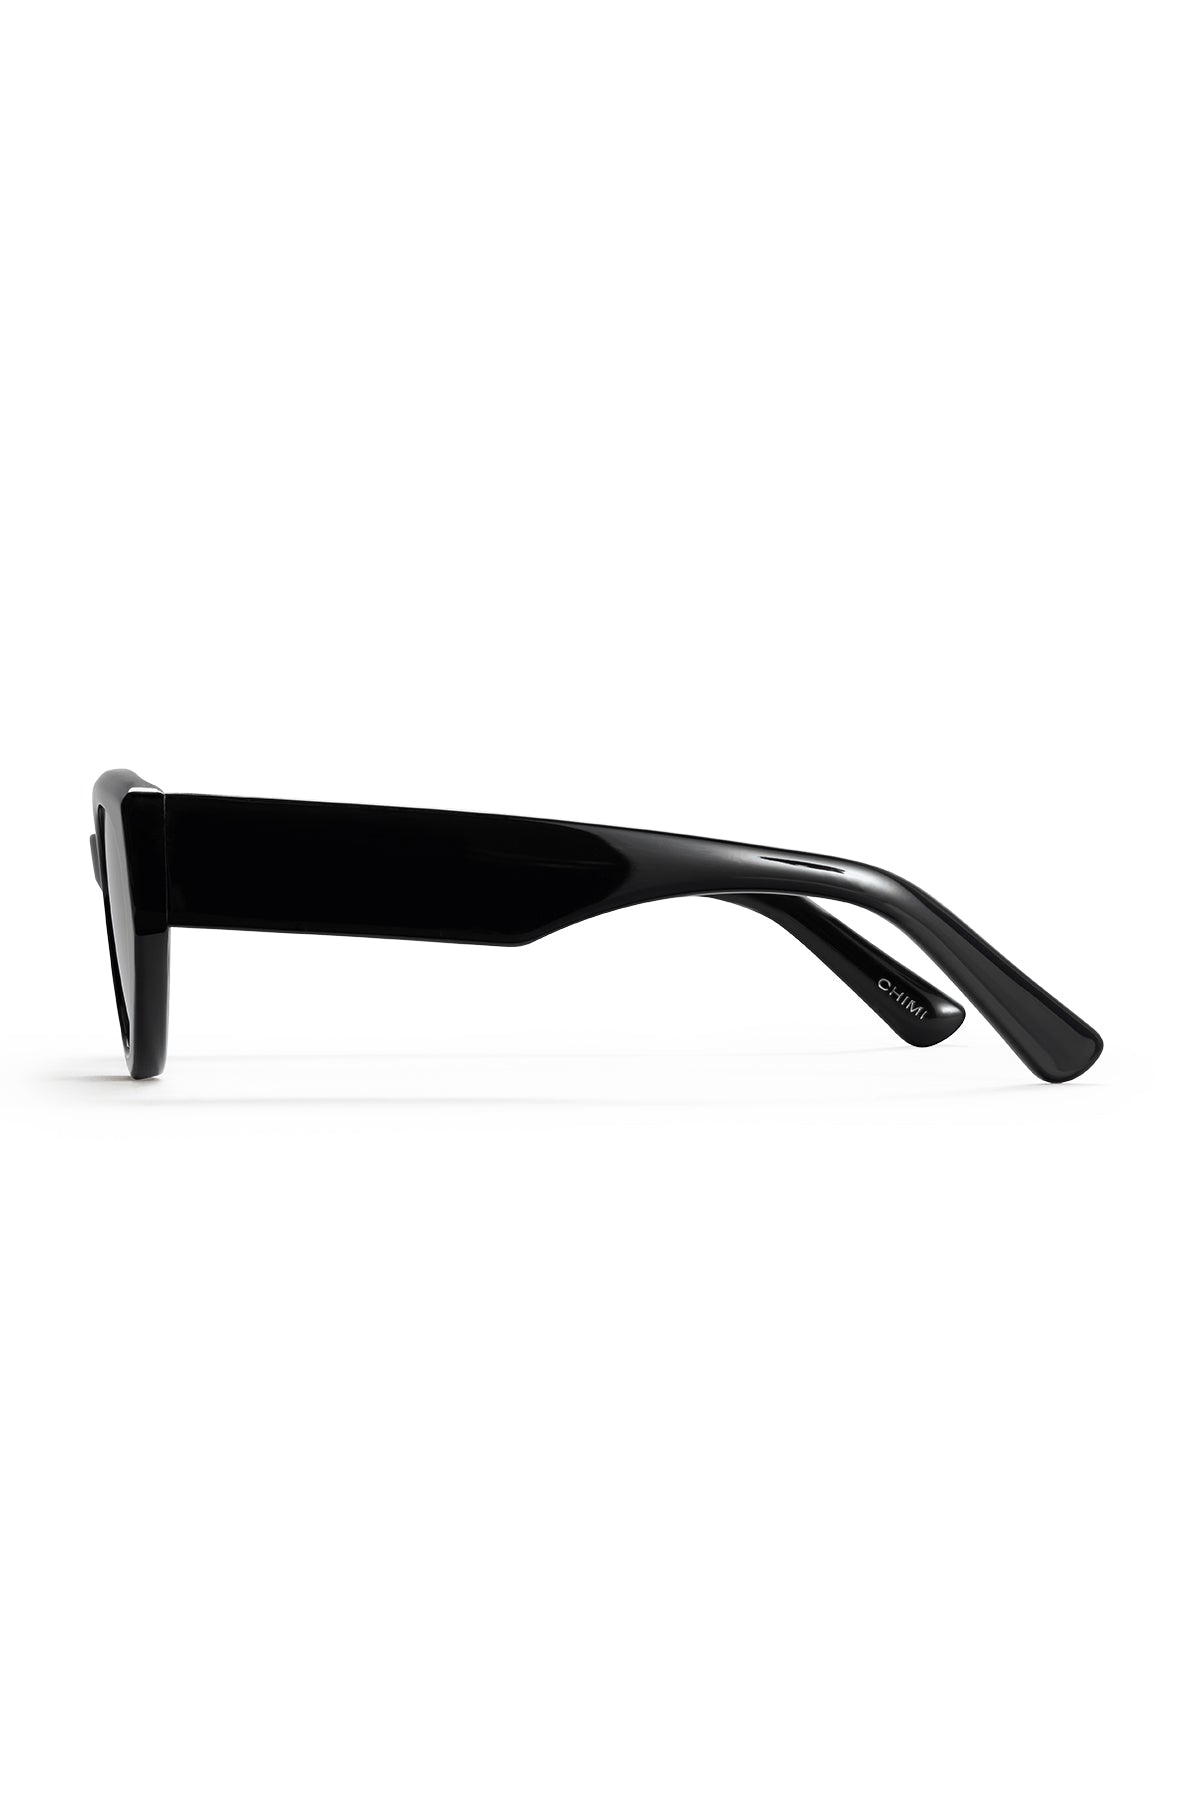 Chimi 06 Sunglasses Black Side-22133021638849